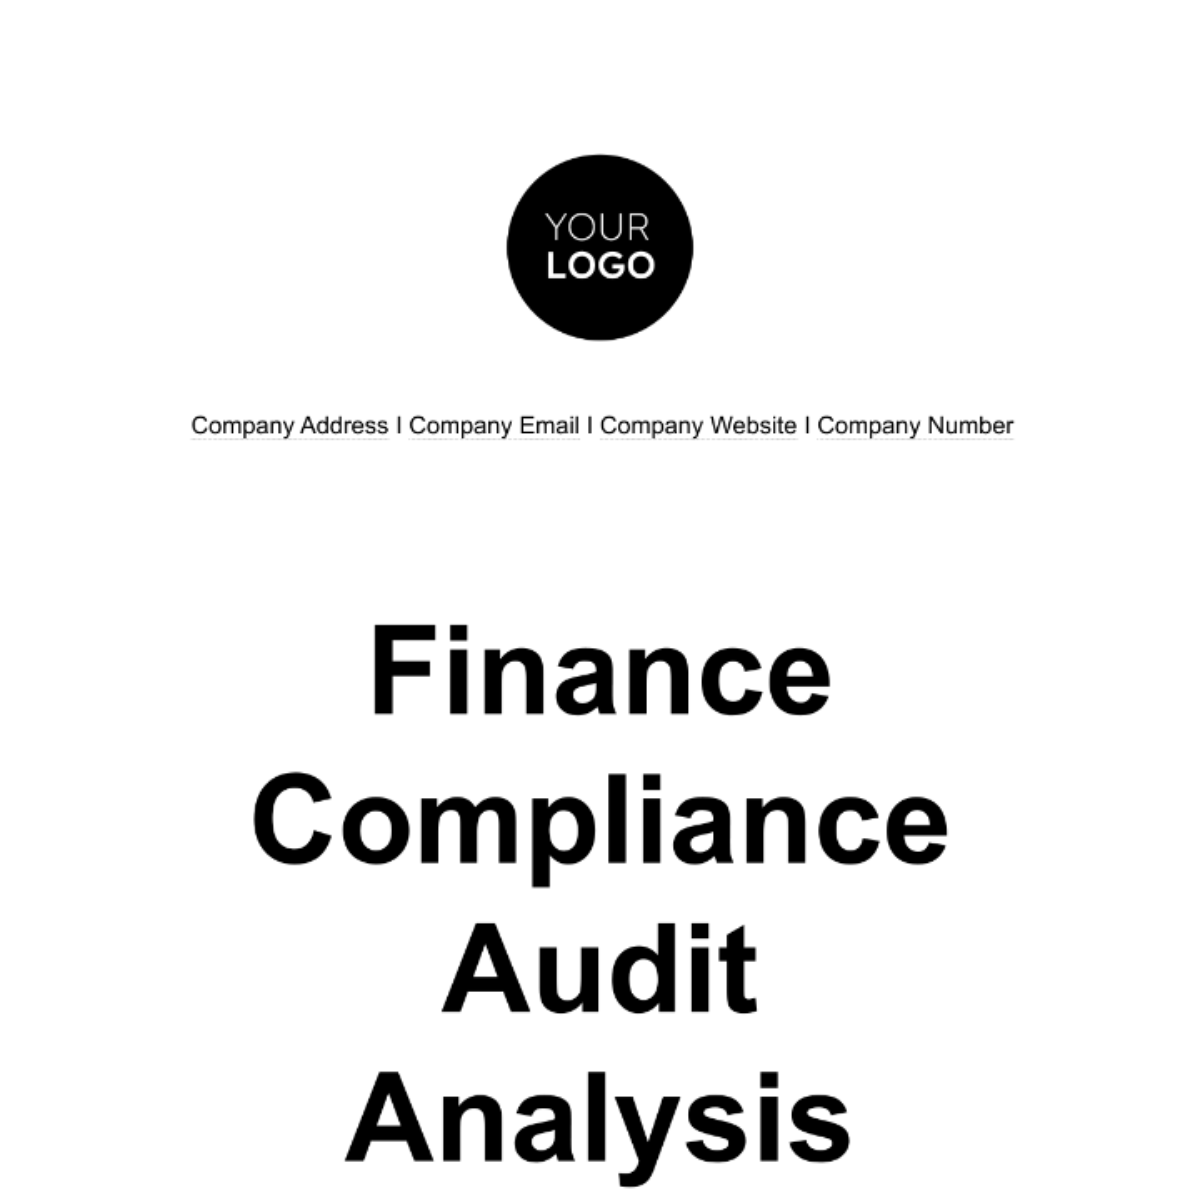 Finance Compliance Audit Analysis Template